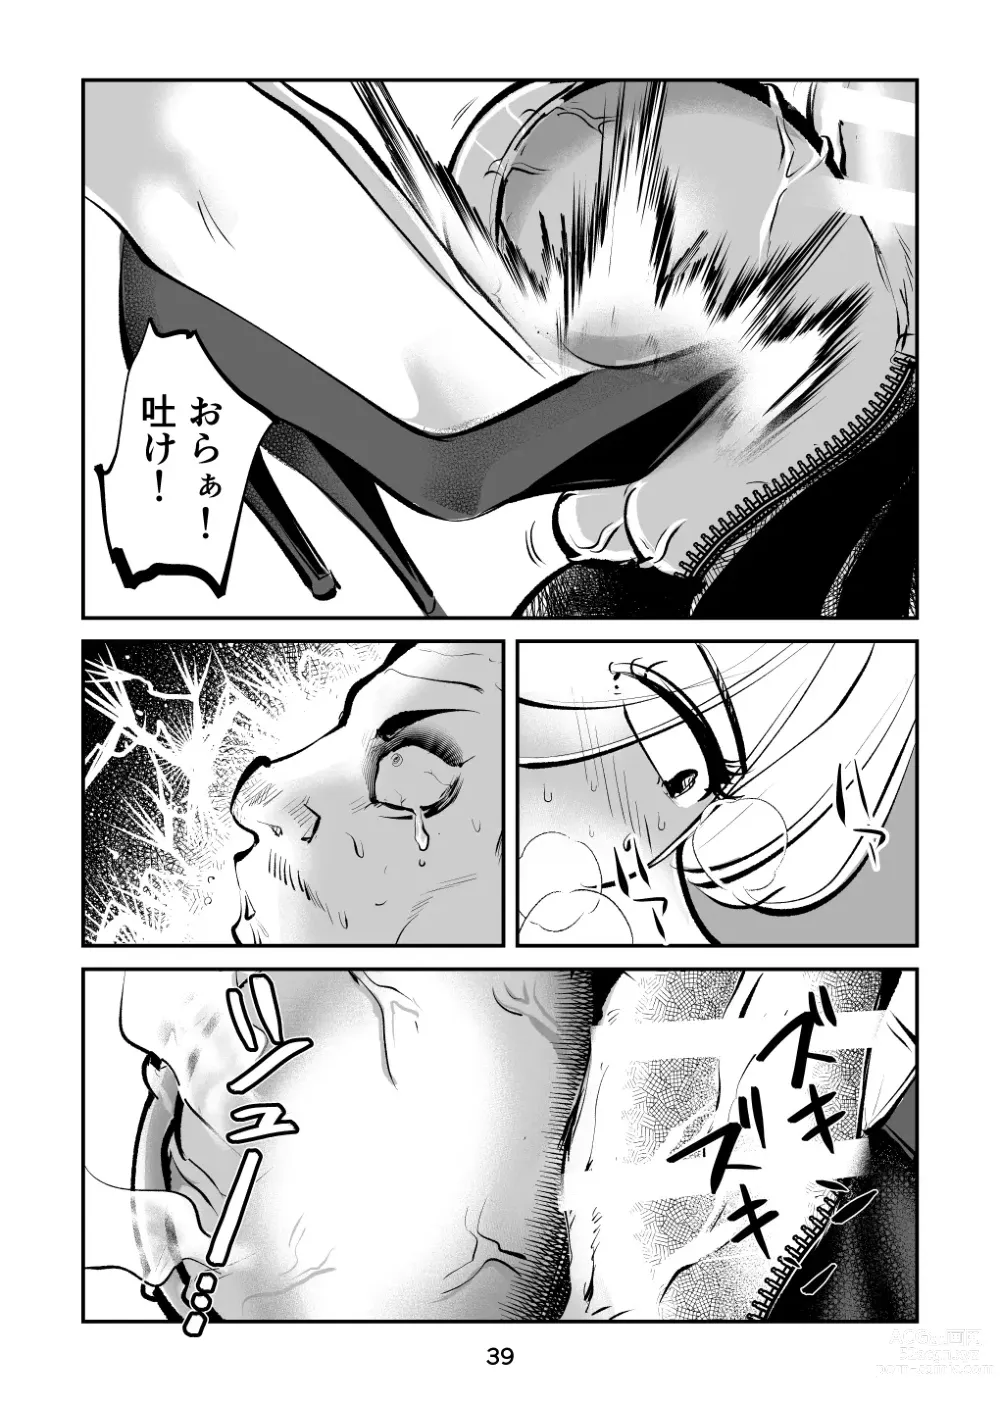 Page 39 of doujinshi Kinkeri onna keiji ryōko